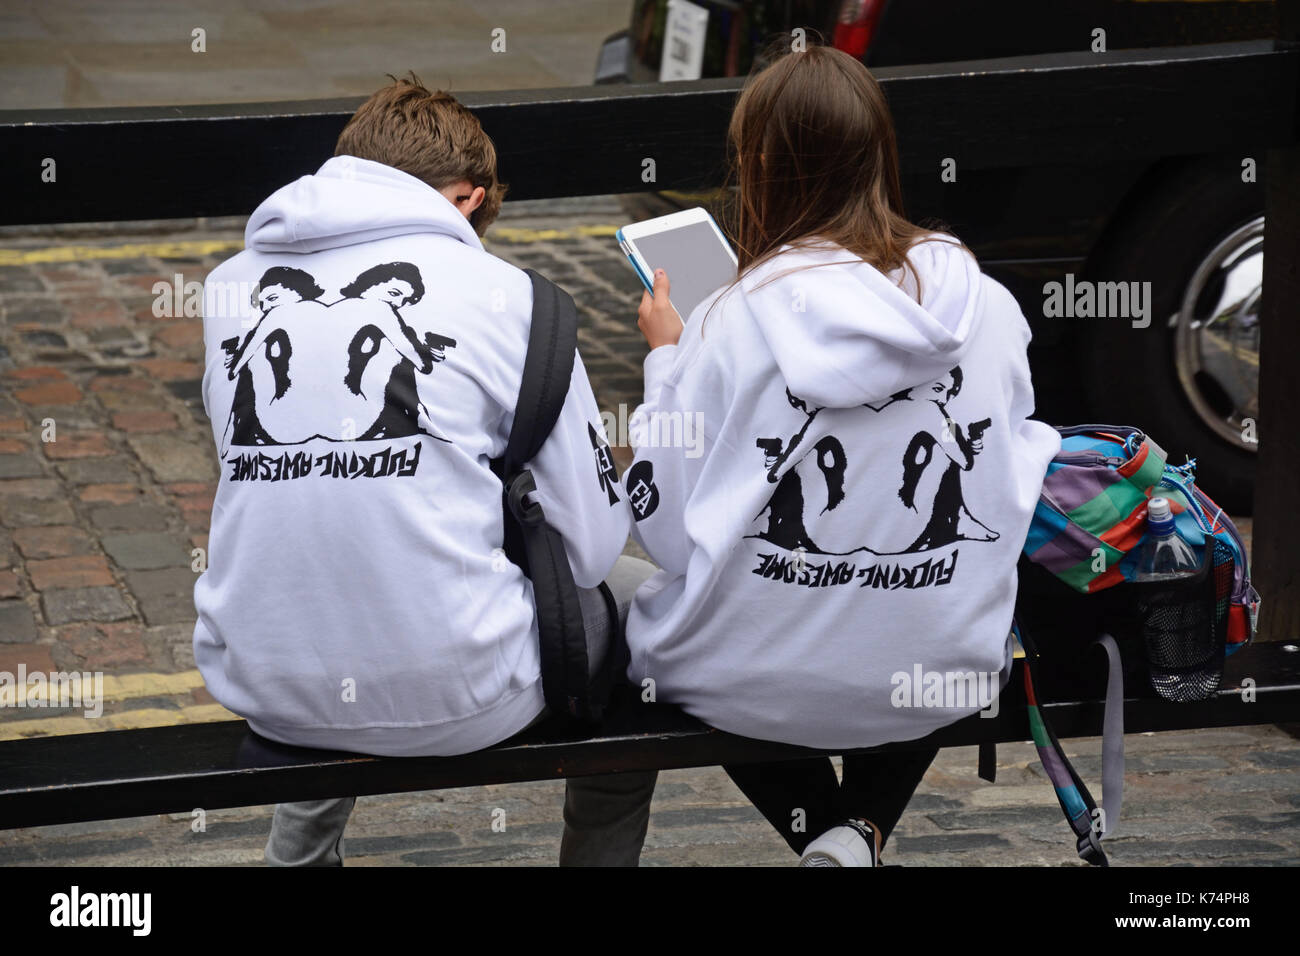 Couple in saucy hoodies, London, Stock Photo